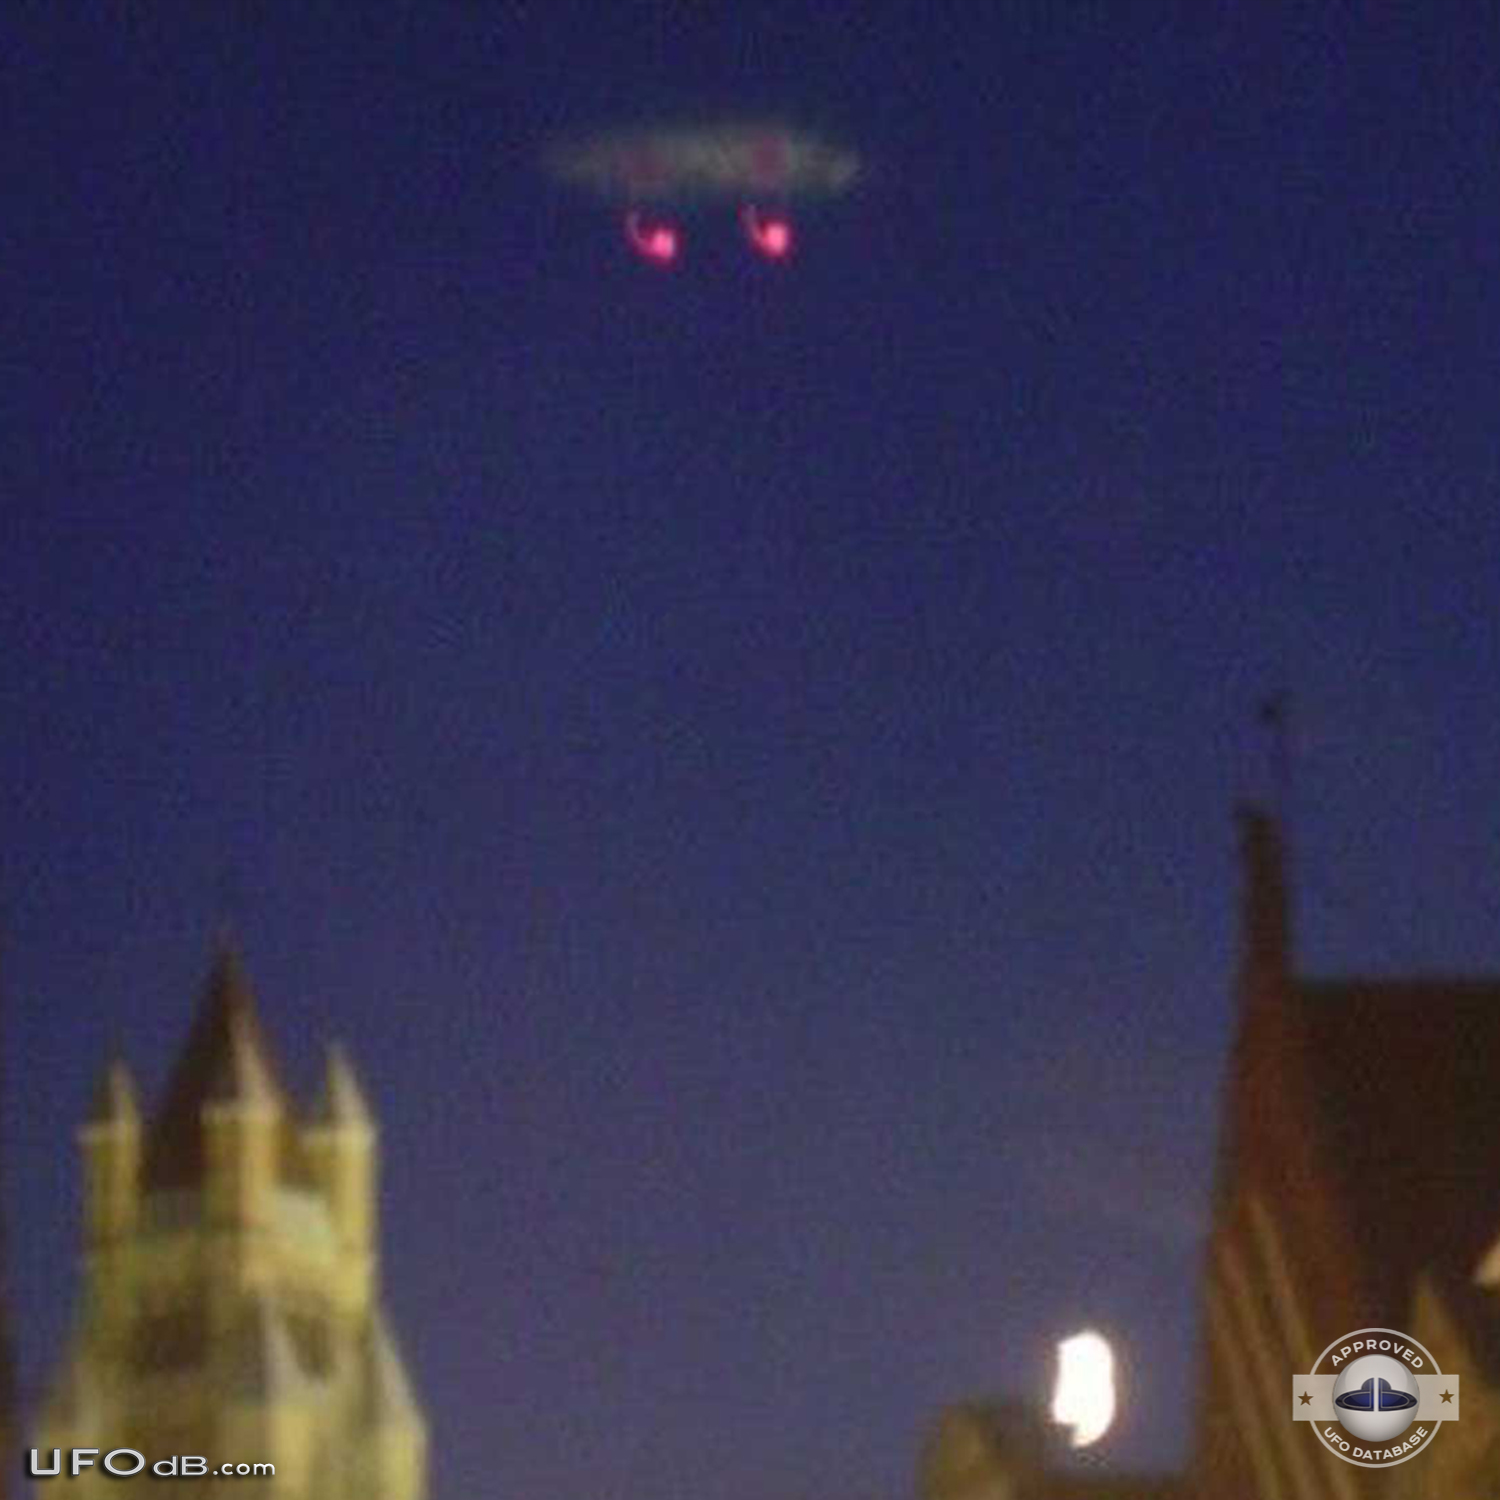 Strange Saucer UFO over Bruges Belgium caugh on picture in 2005 UFO Picture #434-3